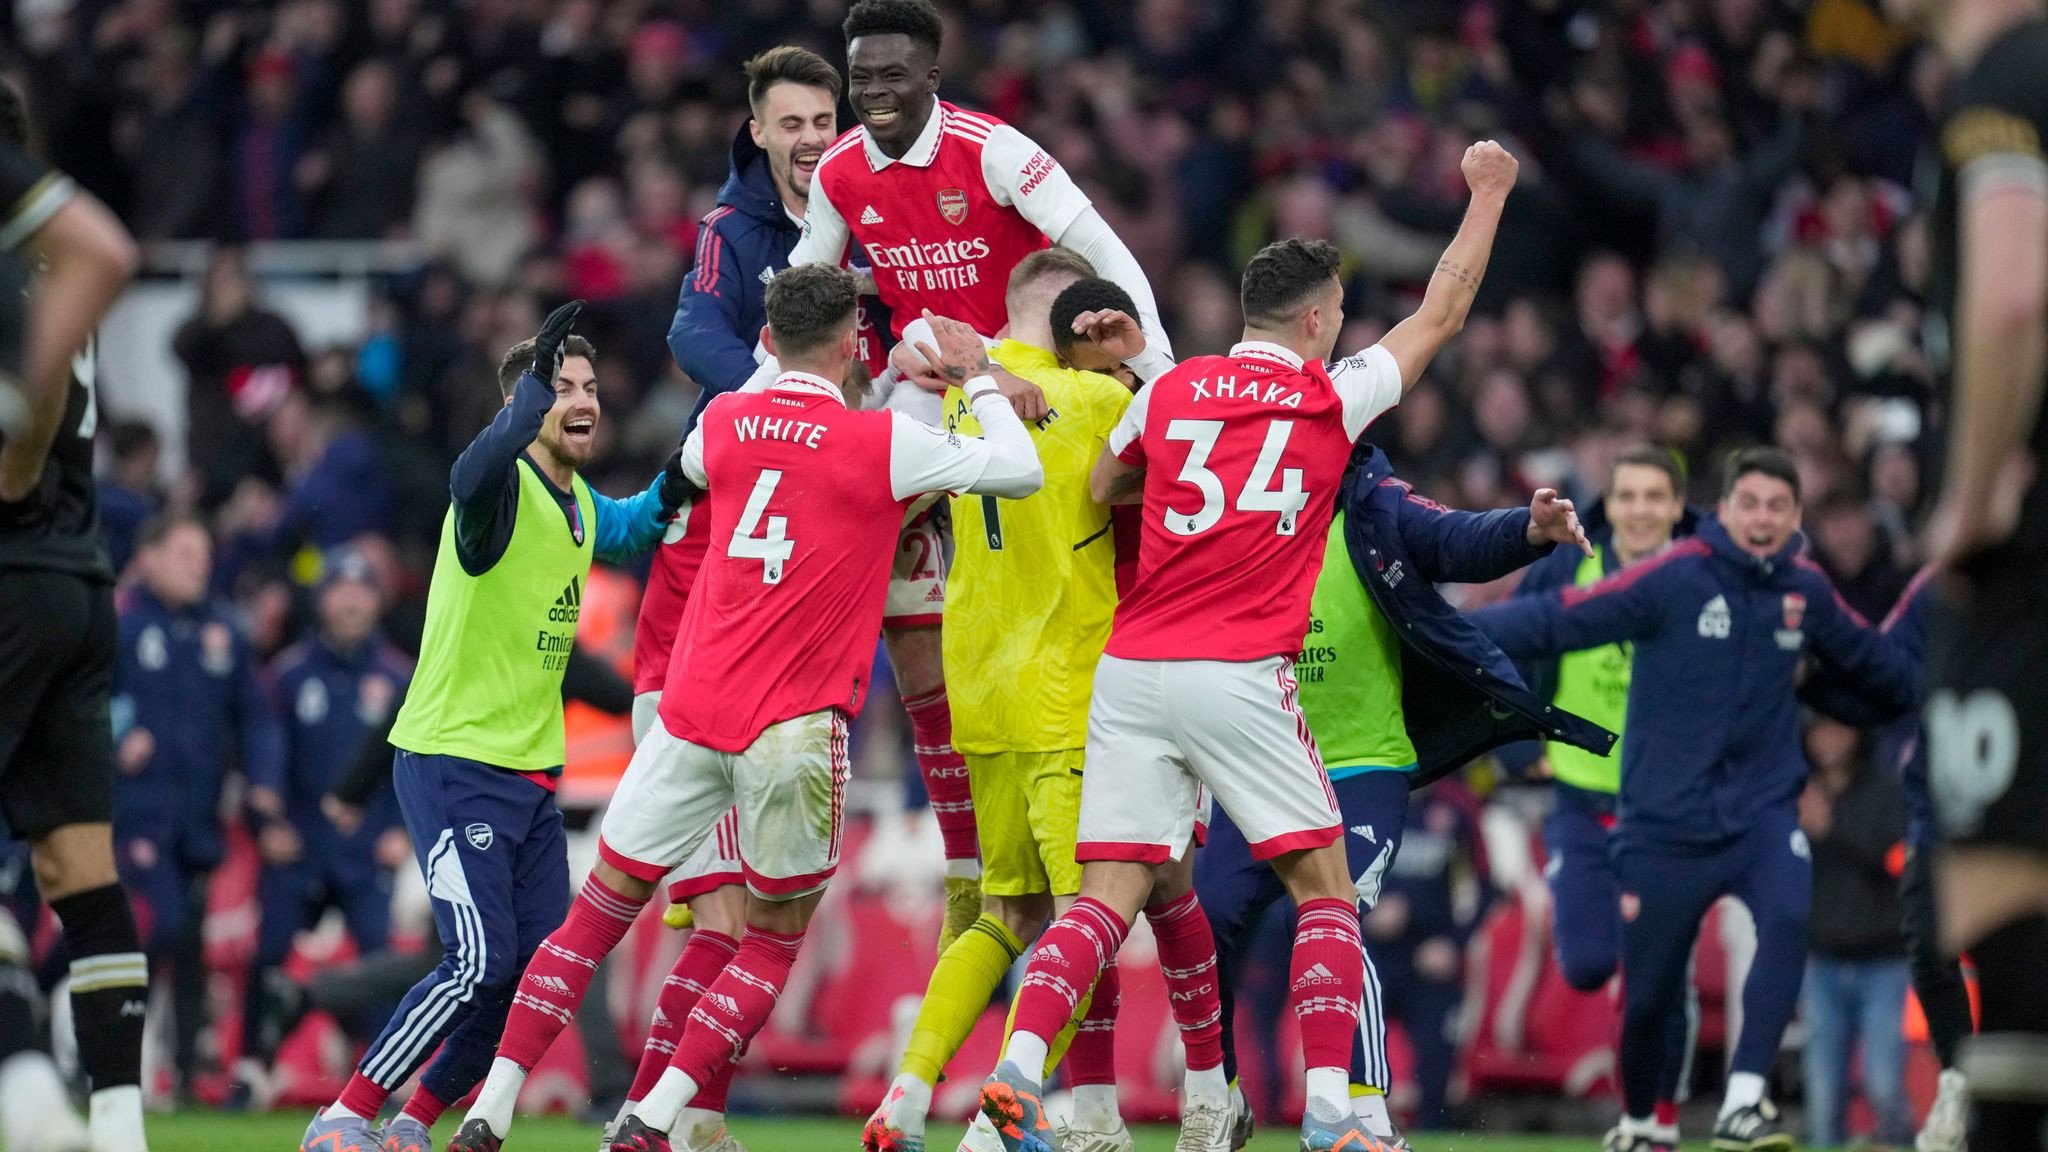 Arsenal 'overwhelmed' by epic fightback: Arteta